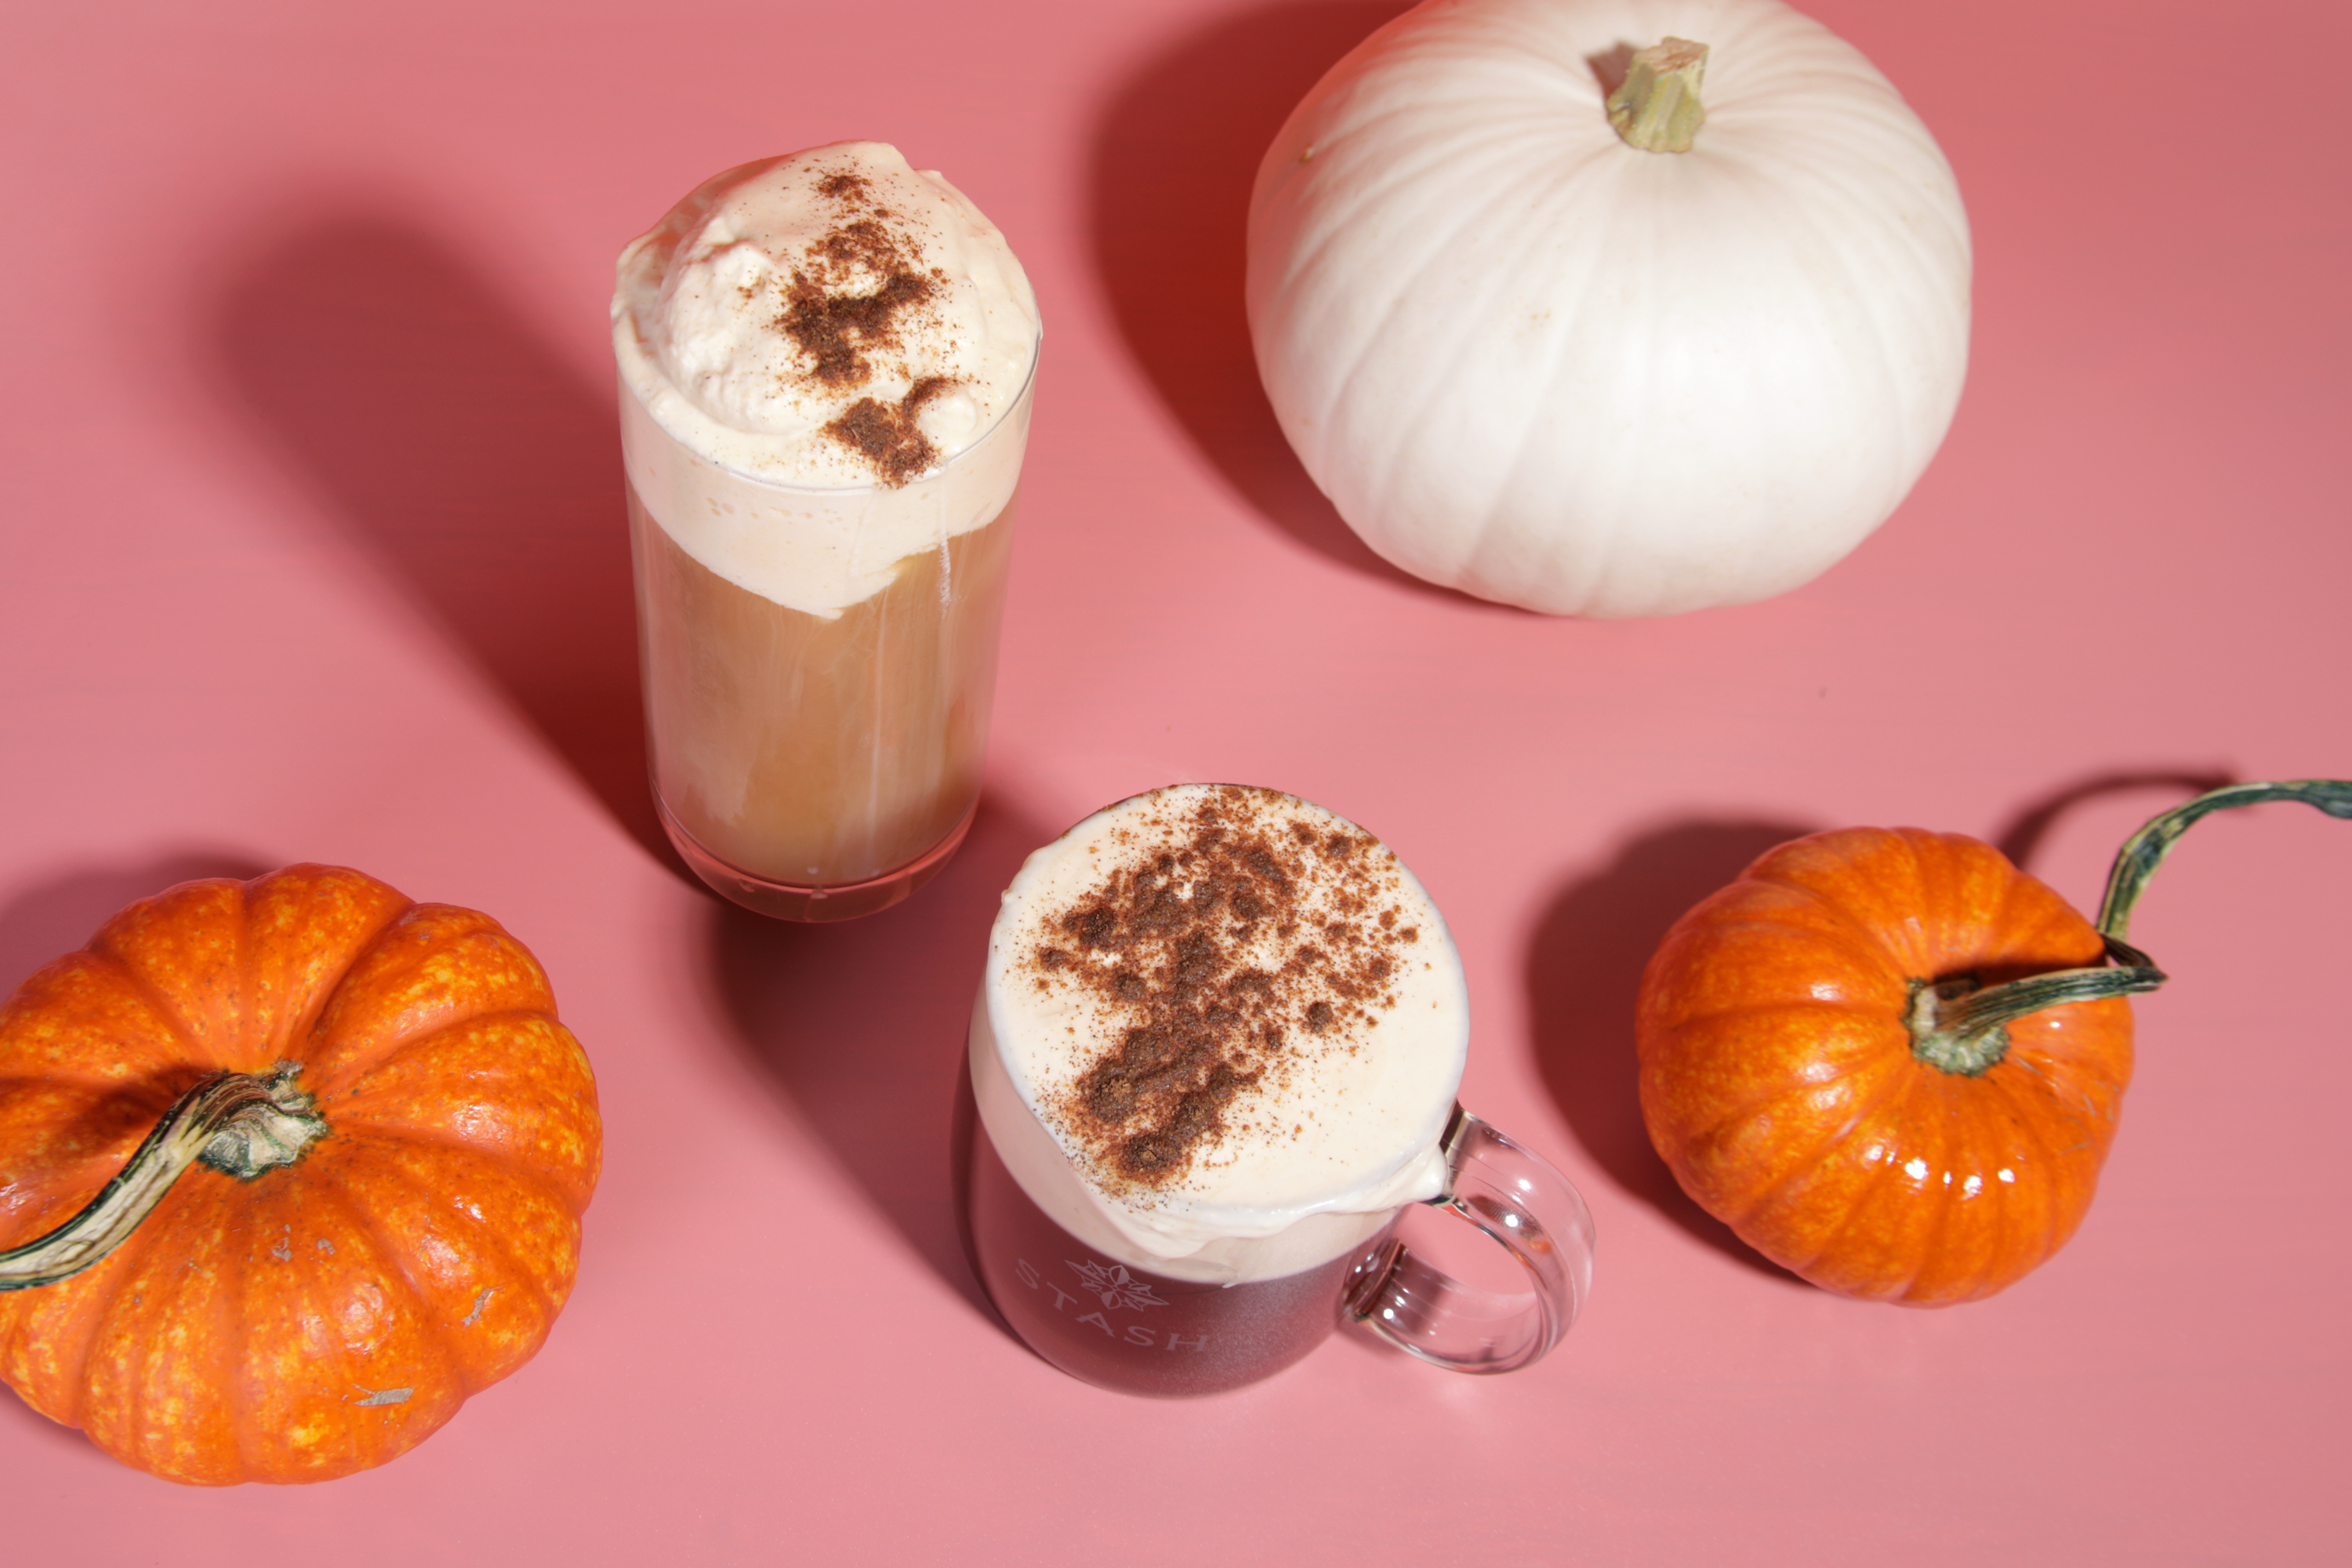 Stash Tea has brewed up this tea-licious recipe for a cold foam pumpkin spice latte